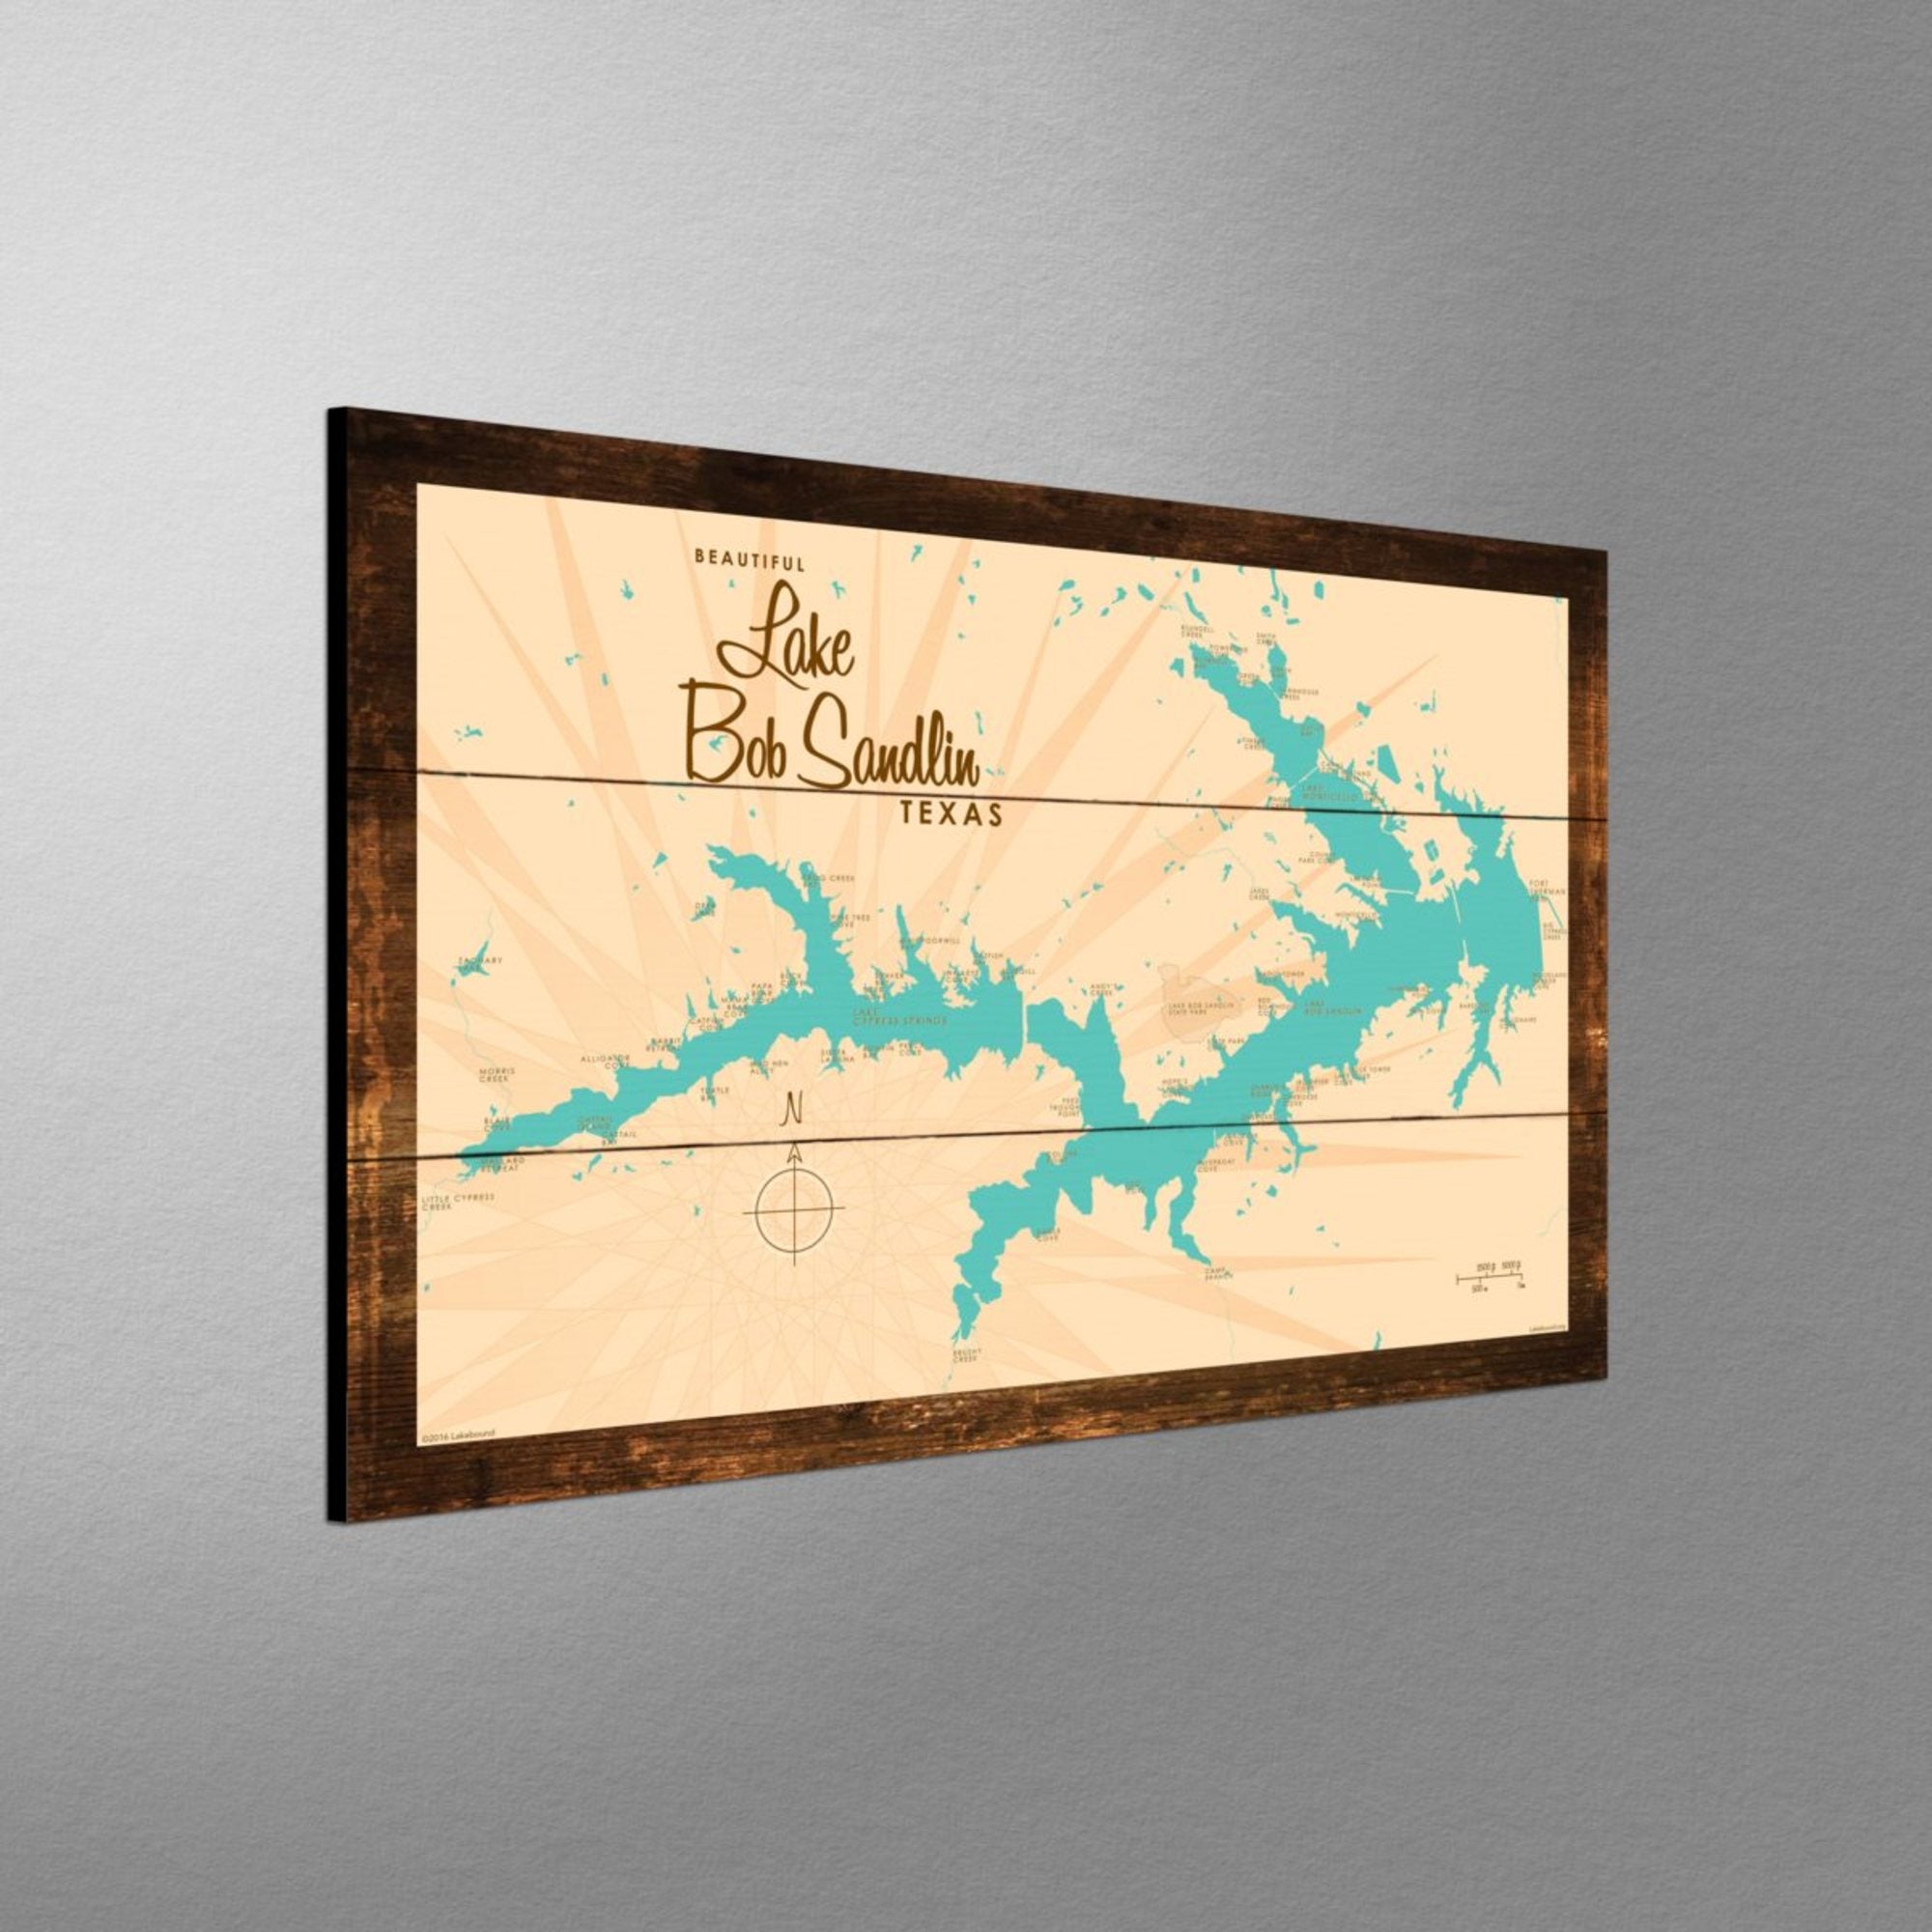 Lake Bob Sandlin Texas, Rustic Wood Sign Map Art